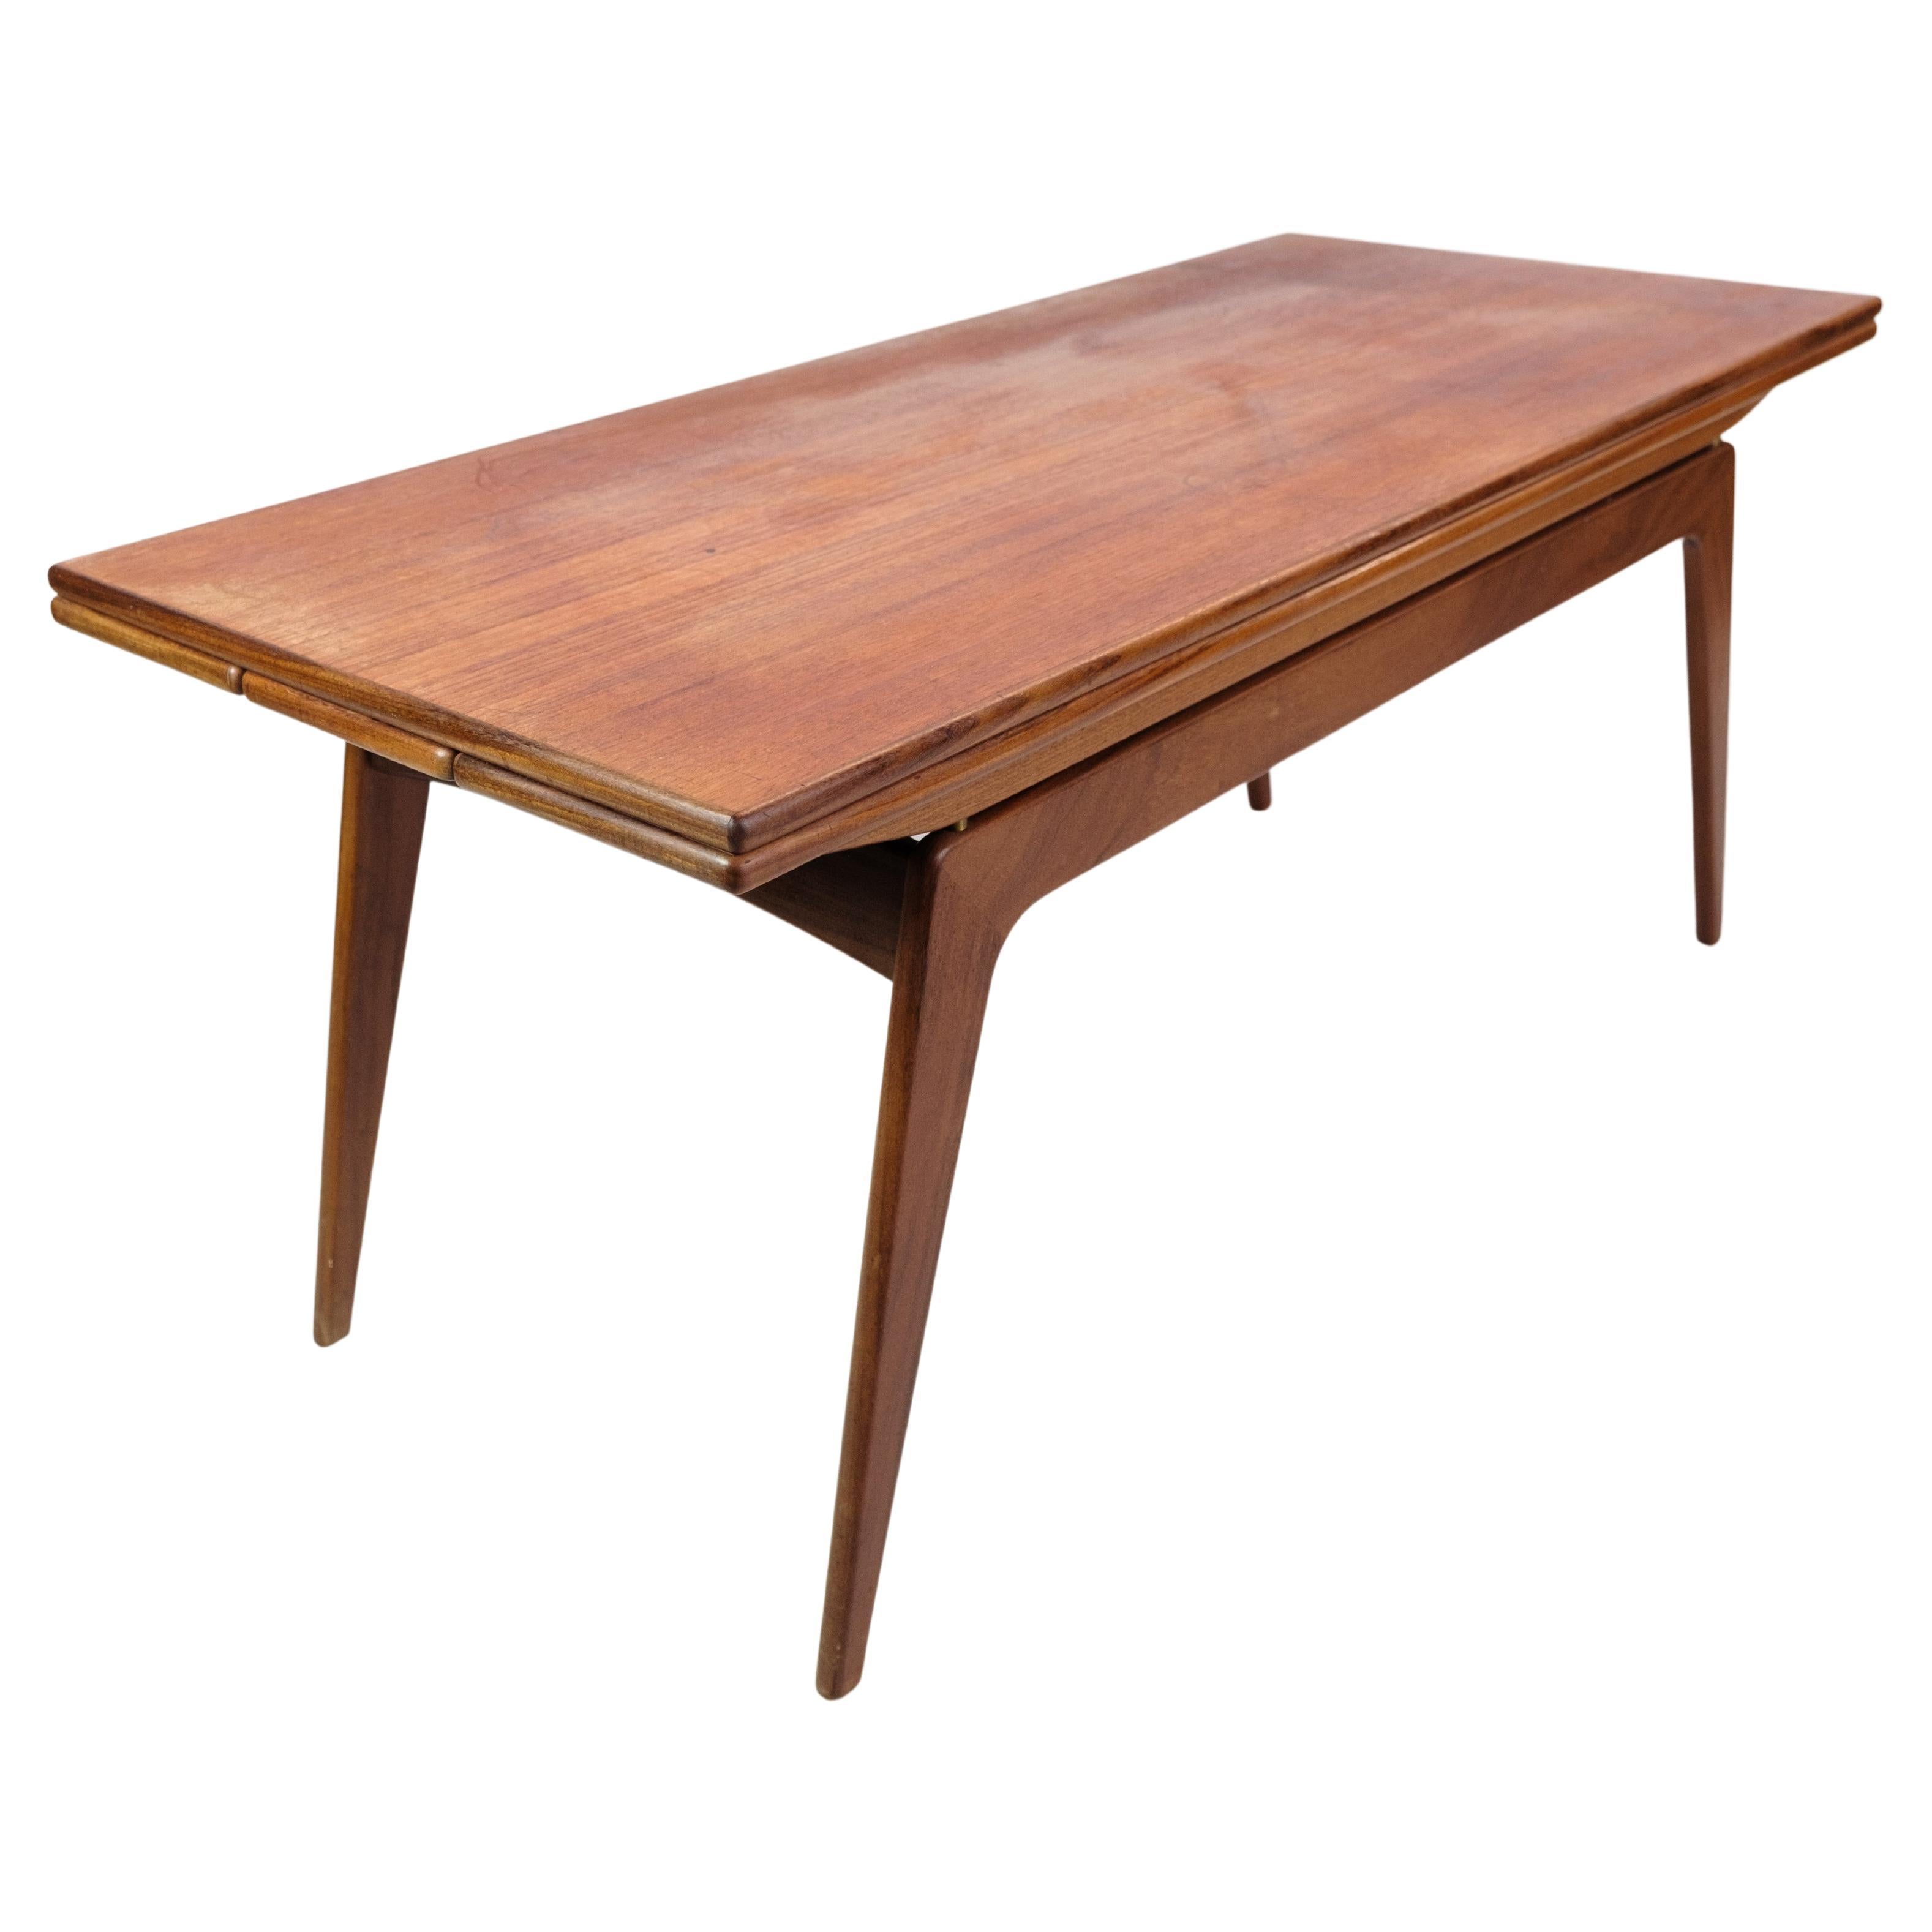 Coffee Table / Dining Table, Teak Wood, Copenhagen Table, Danish Furniture Manuf